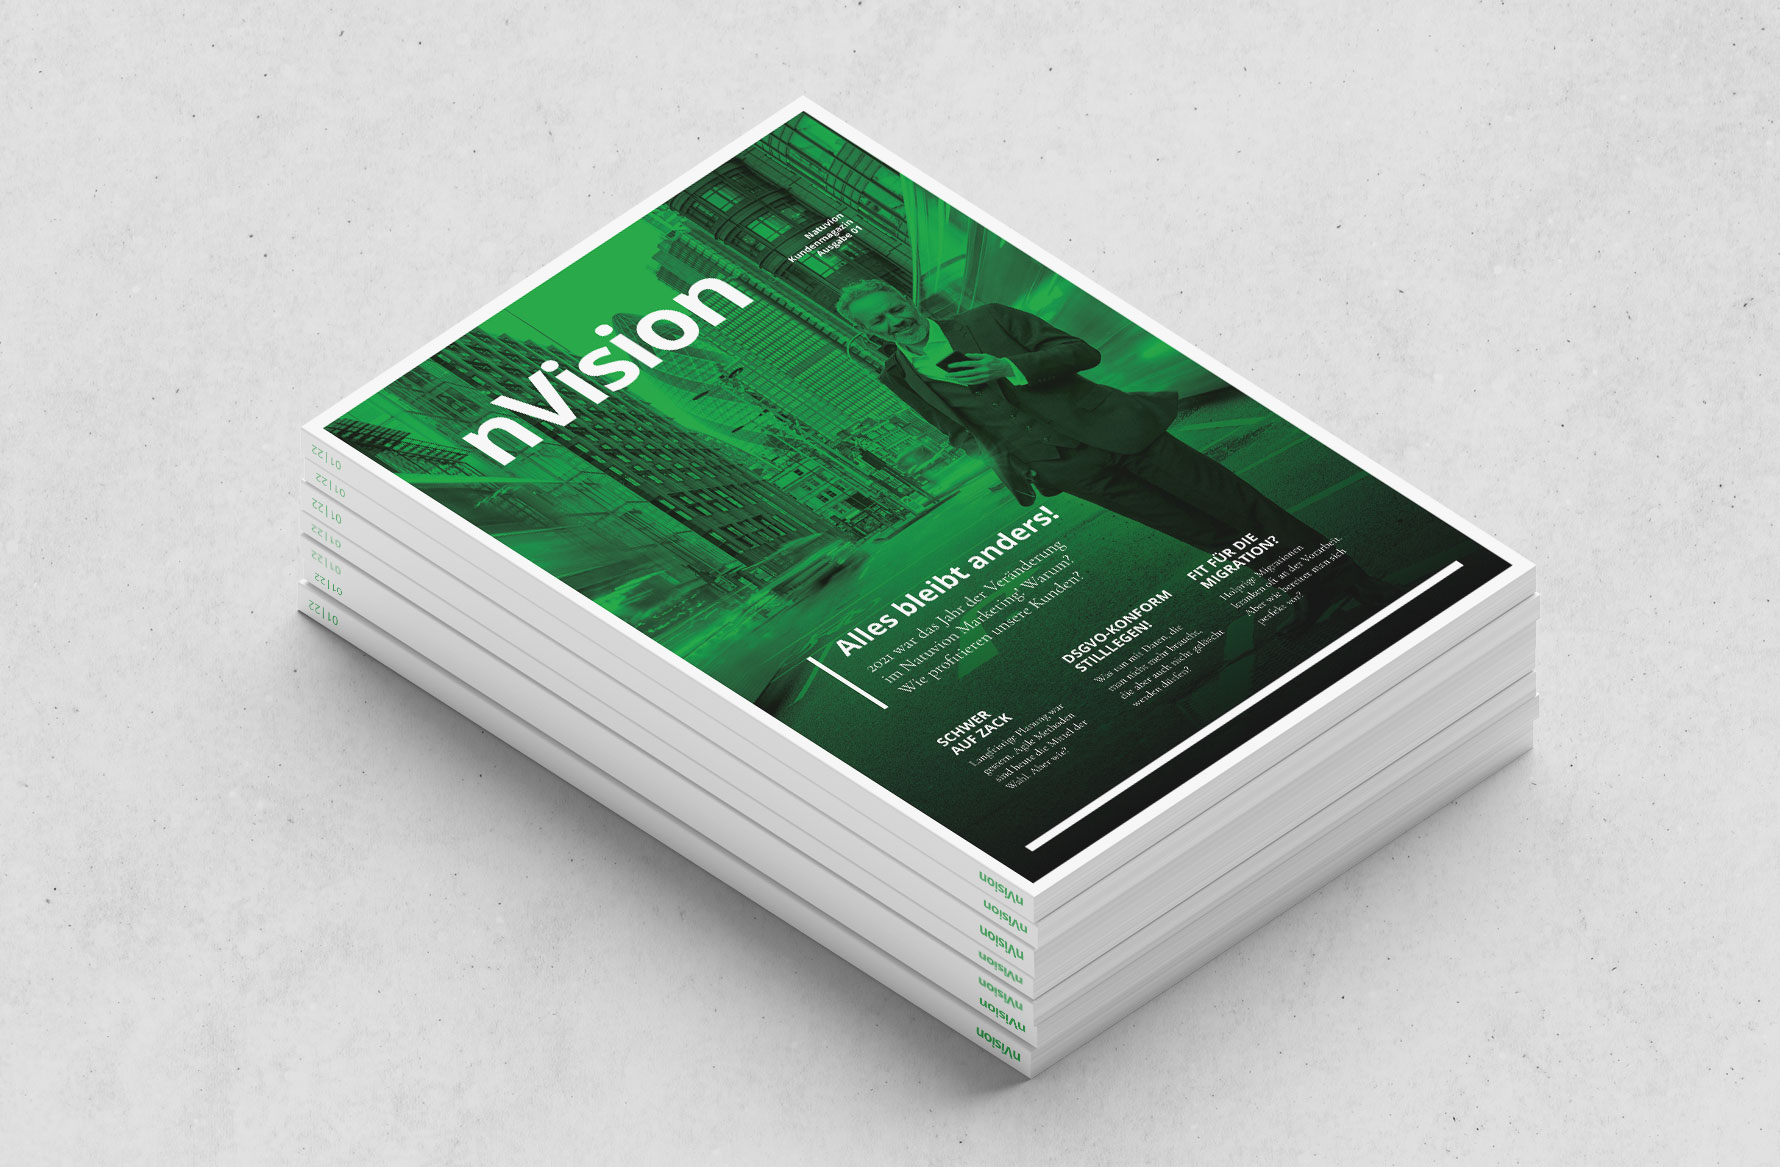 Hüfner Design | Referenz Natuvion | nVision | Kundenmagazin